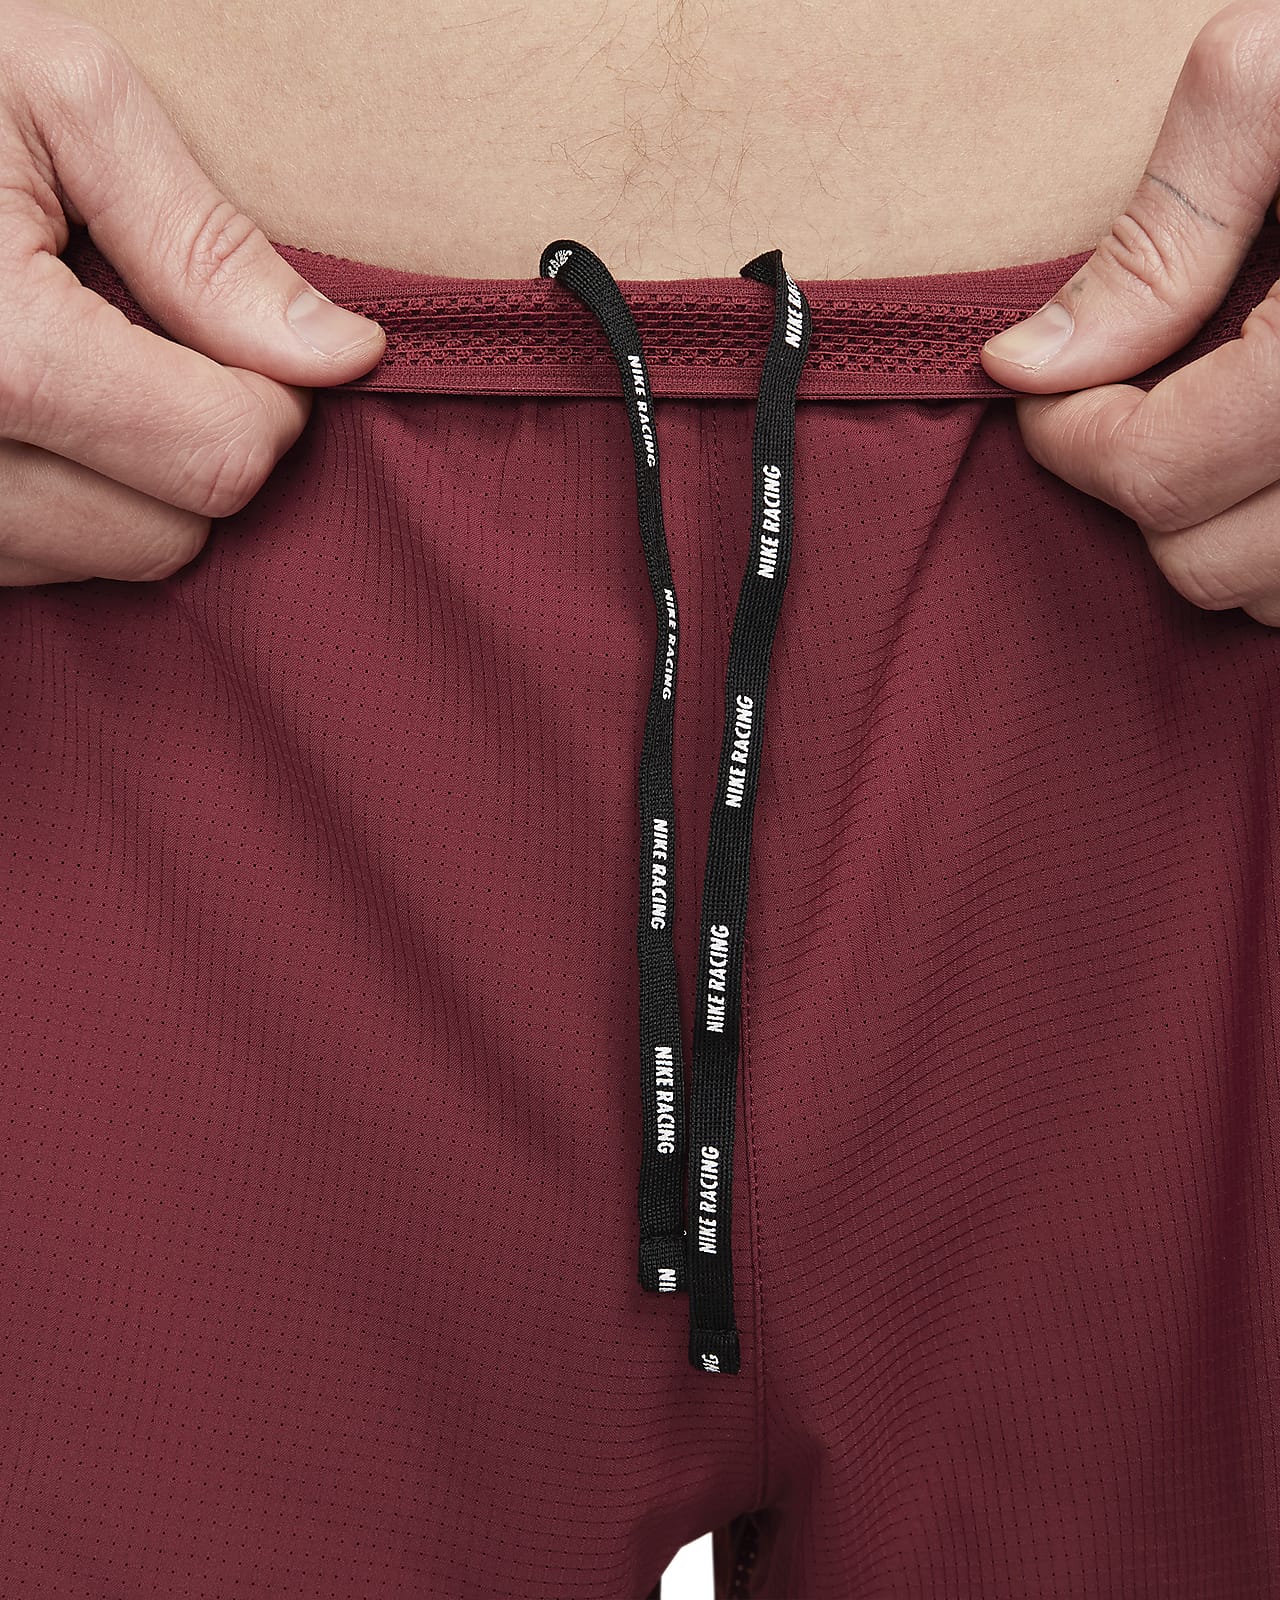 Verenigde Staten van Amerika passend Wees Nike AeroSwift Men's 5cm (approx.) Brief-Lined Racing Shorts. Nike LU